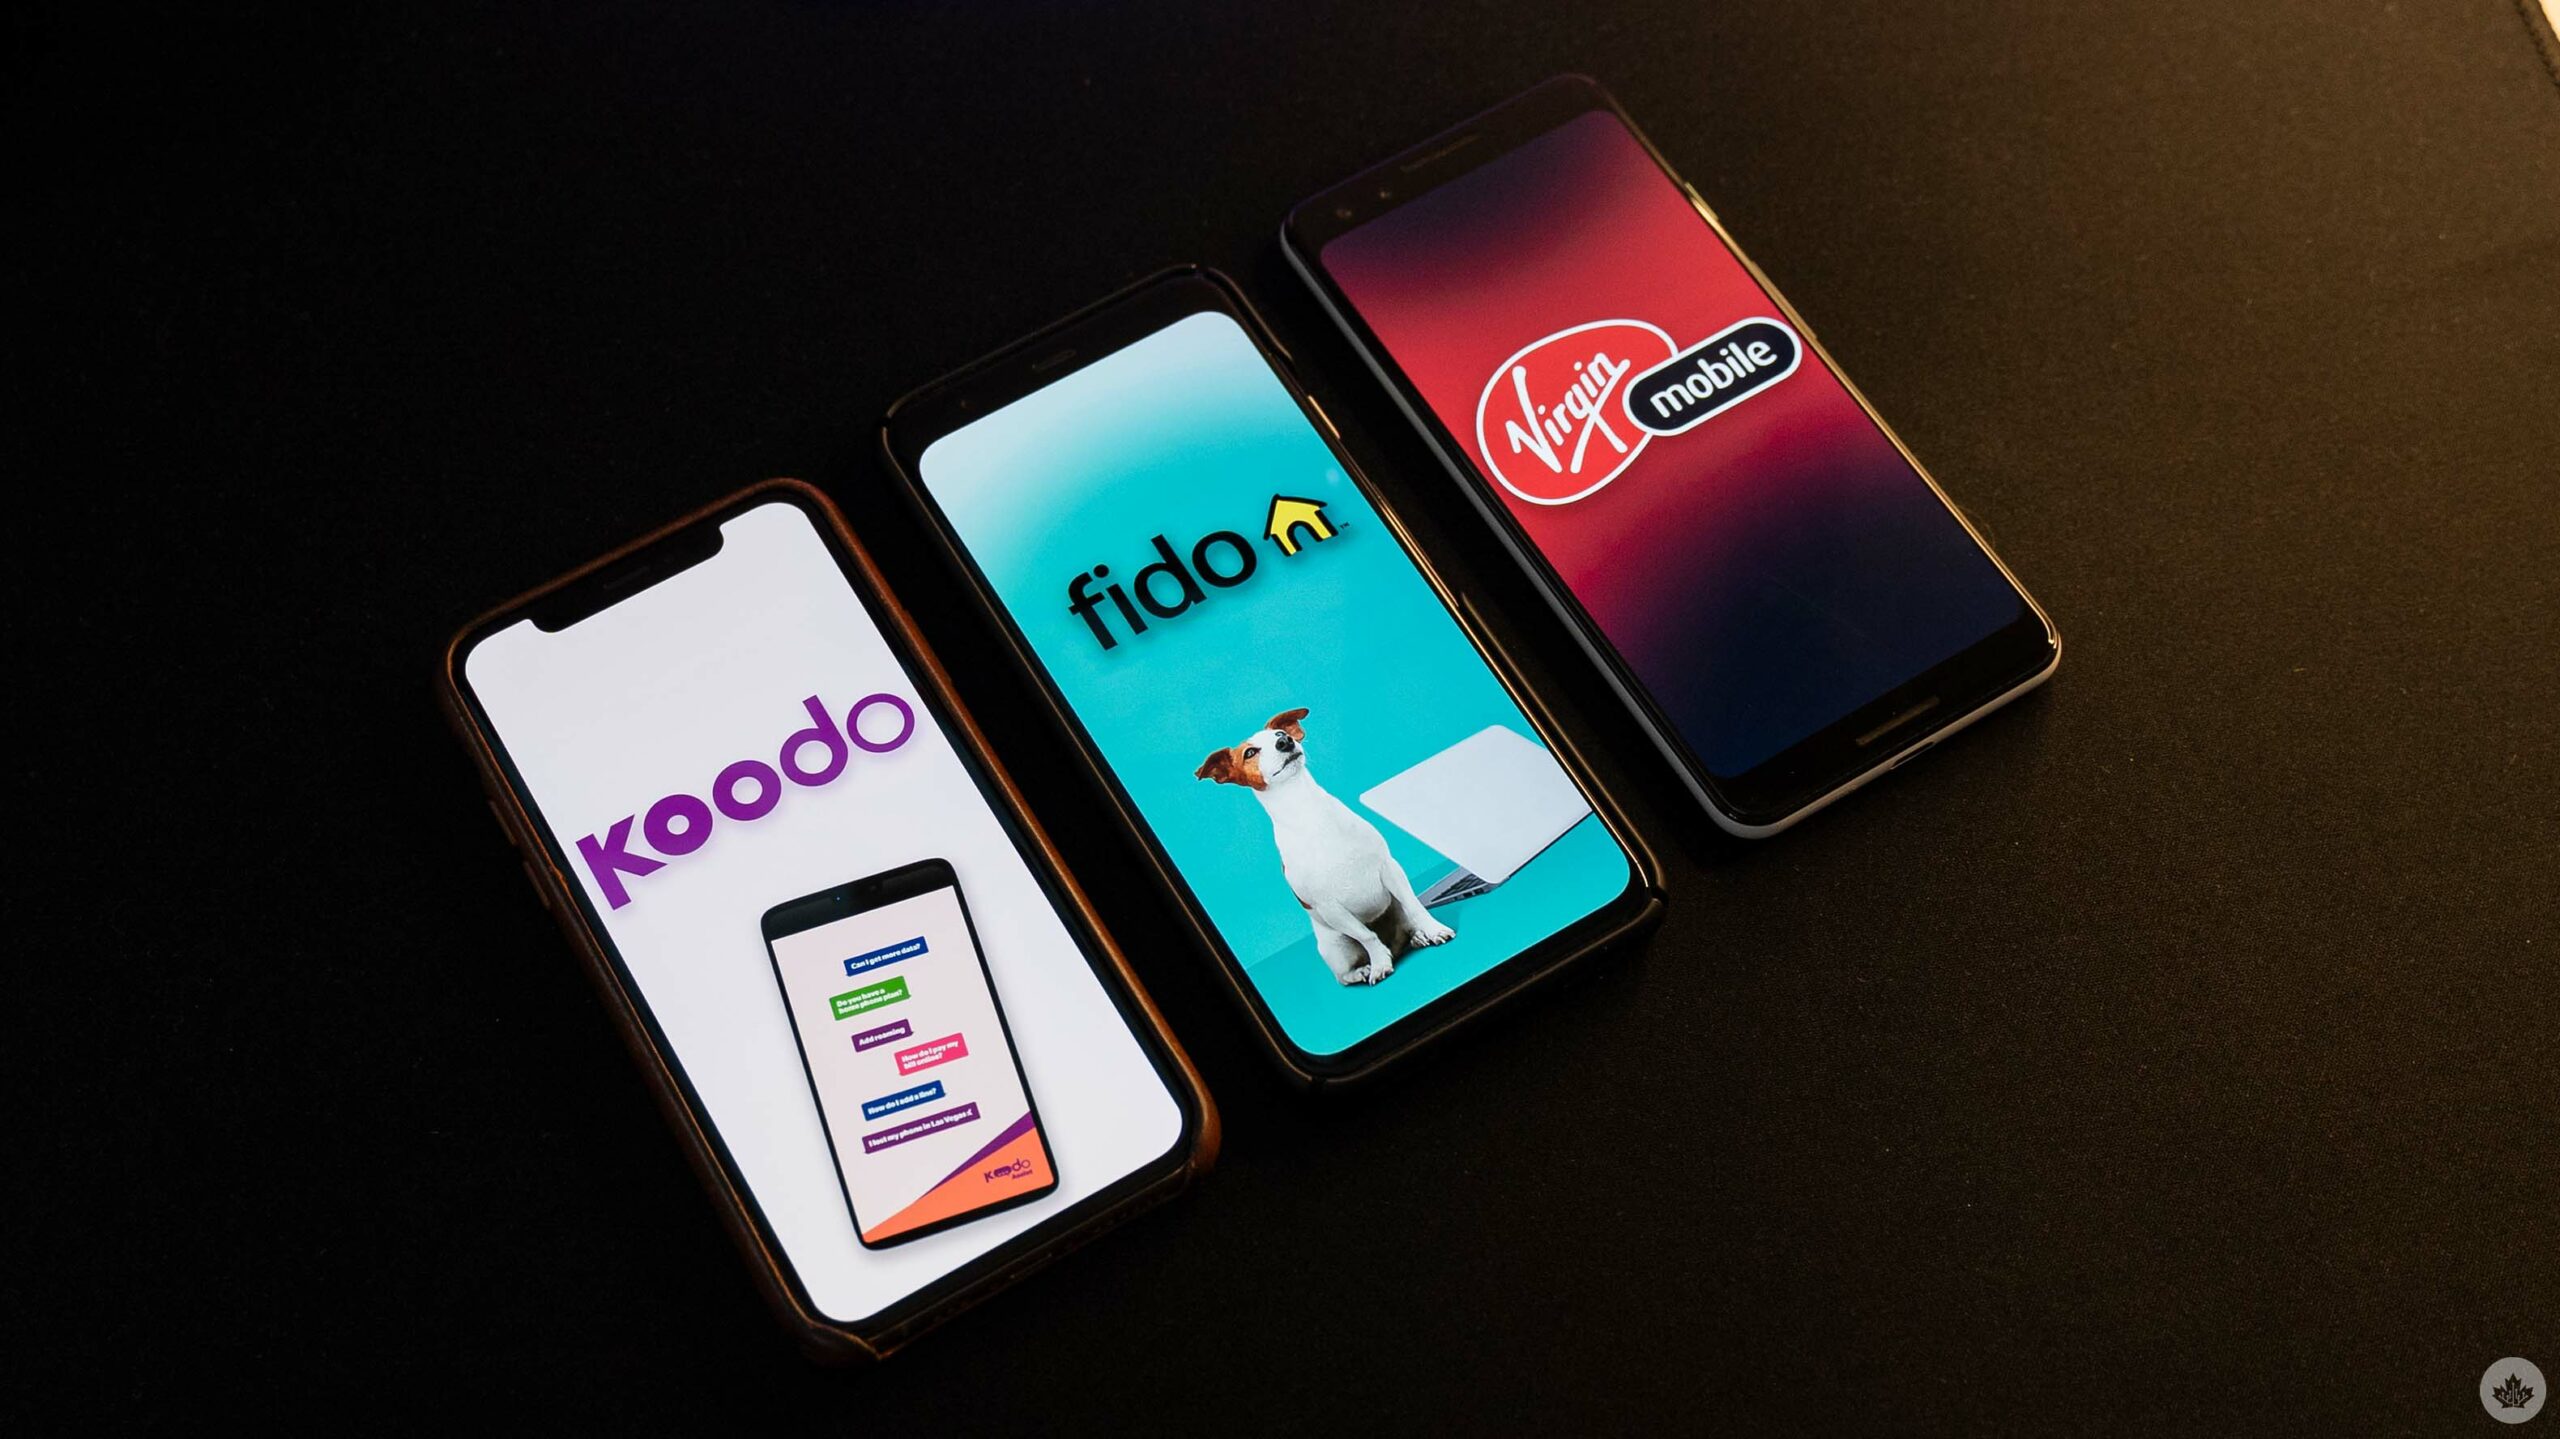 Koodo, Fido, and Virgin Plus logos on smartphones.